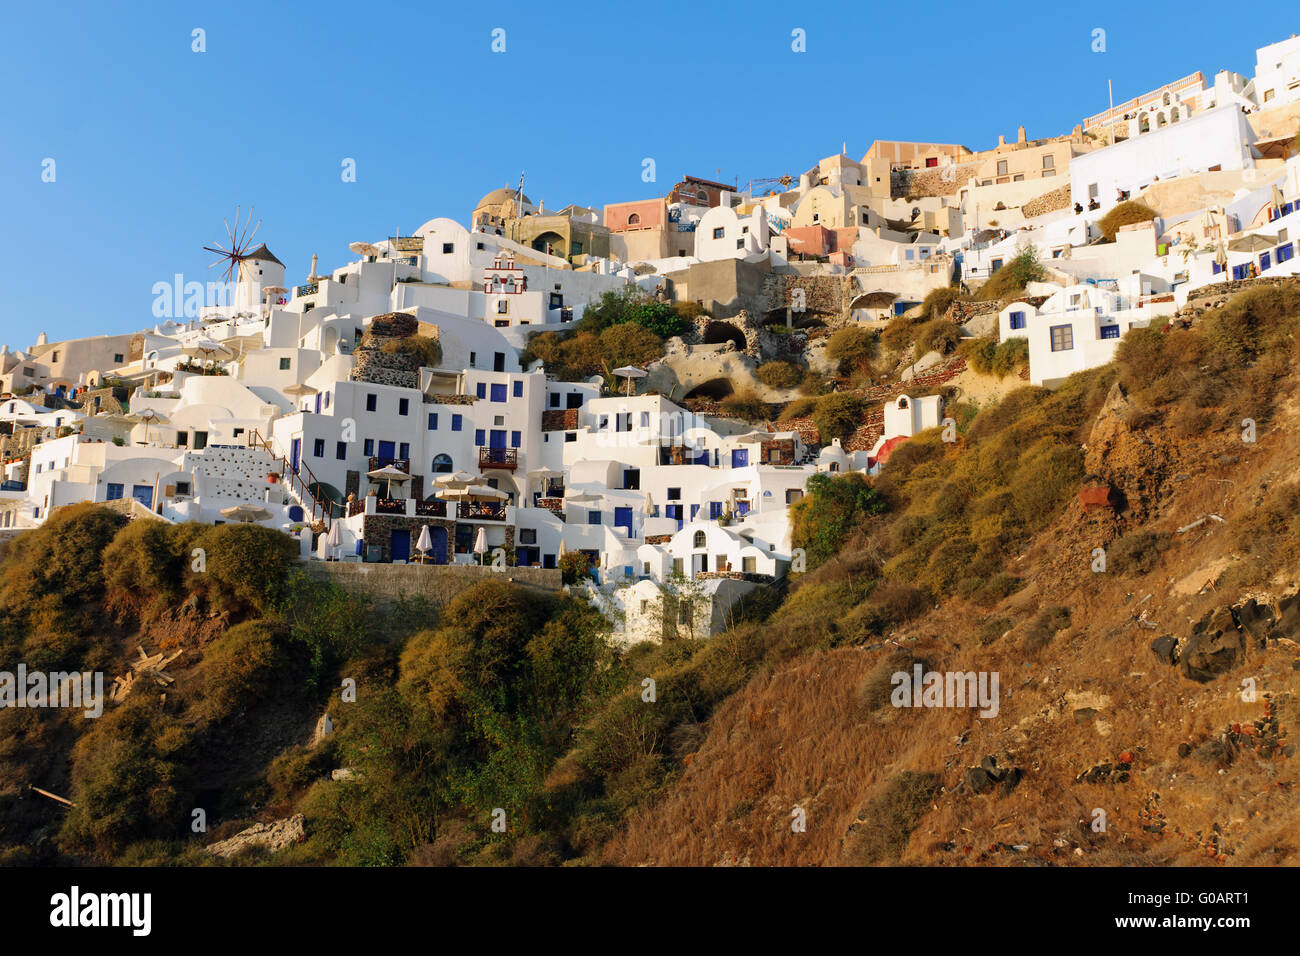 The village of Oia on Santorini Island, Greece Stock Photo